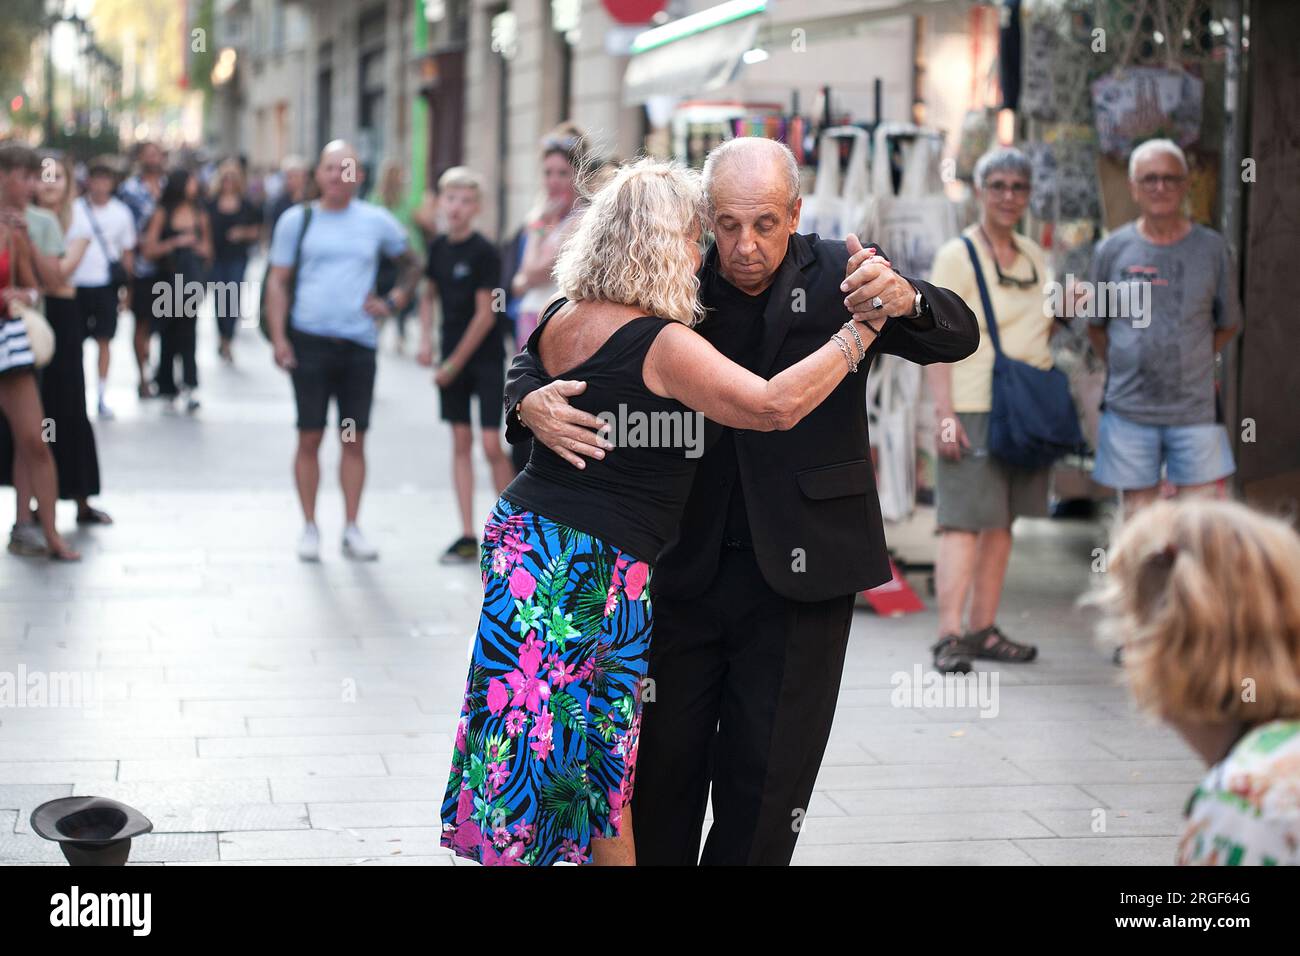 Ein altes Paar tanzt Tango in Barcelona. Stockfoto